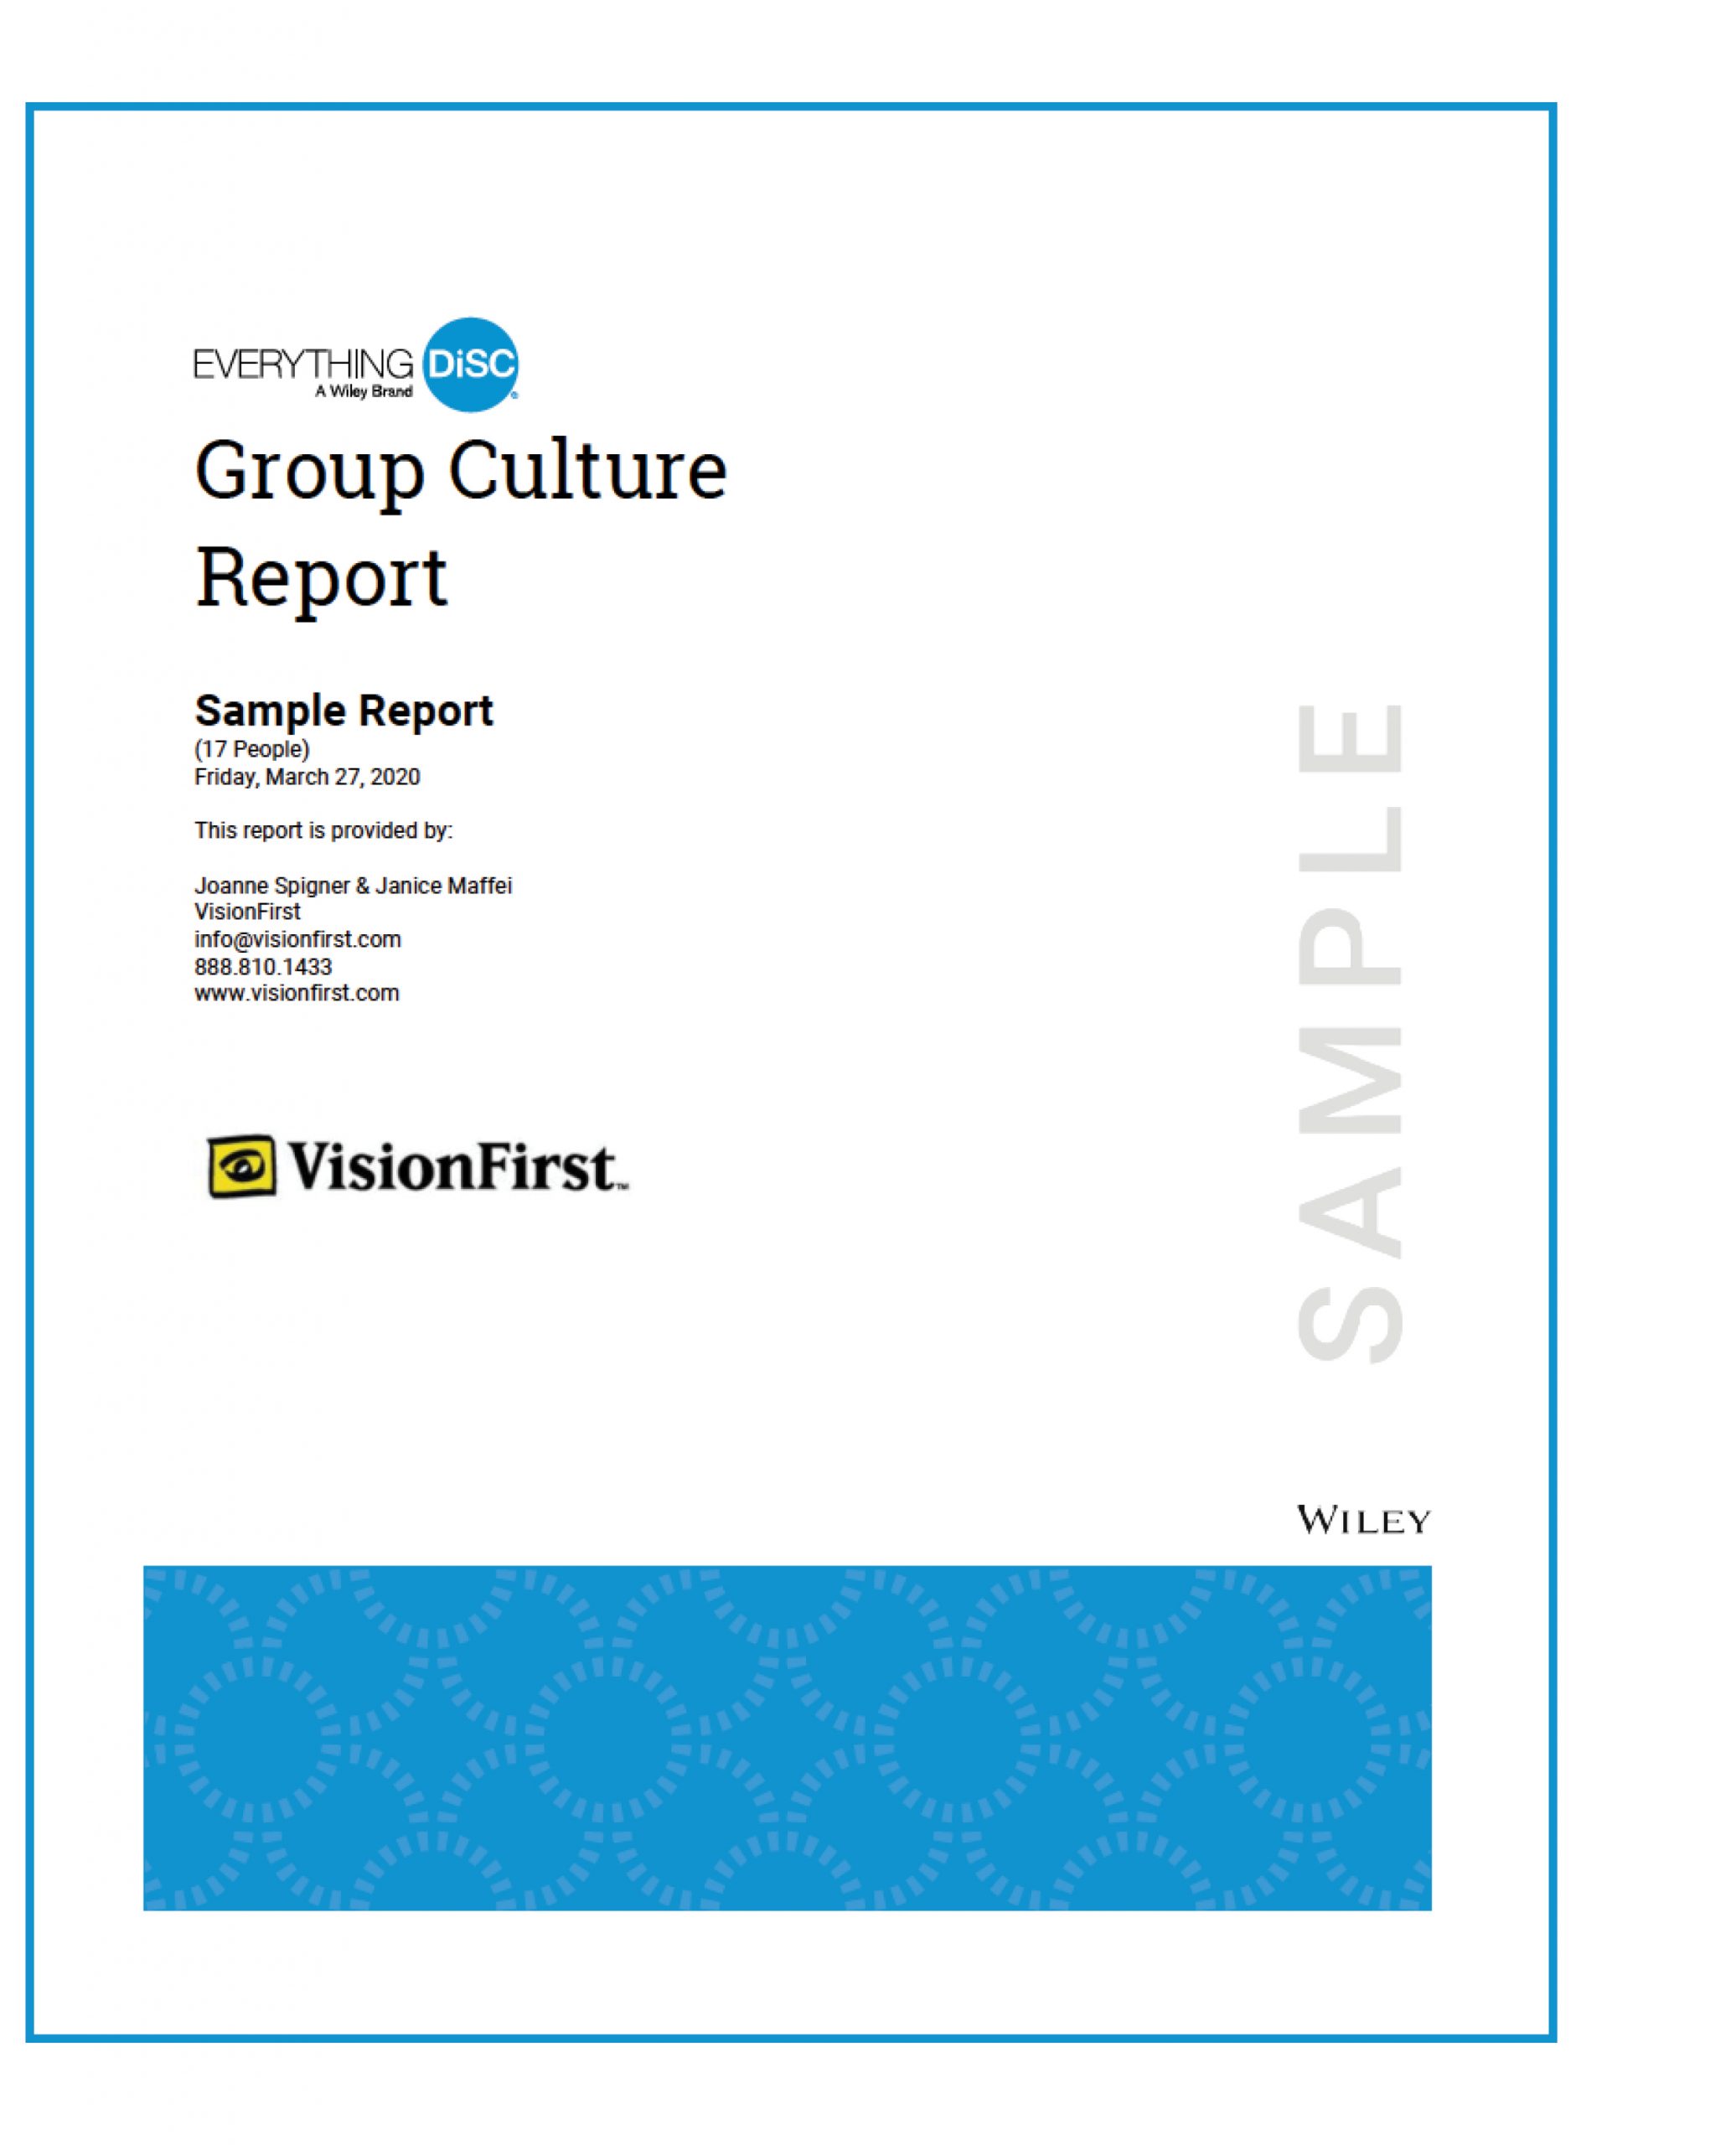 Group culture sample report box